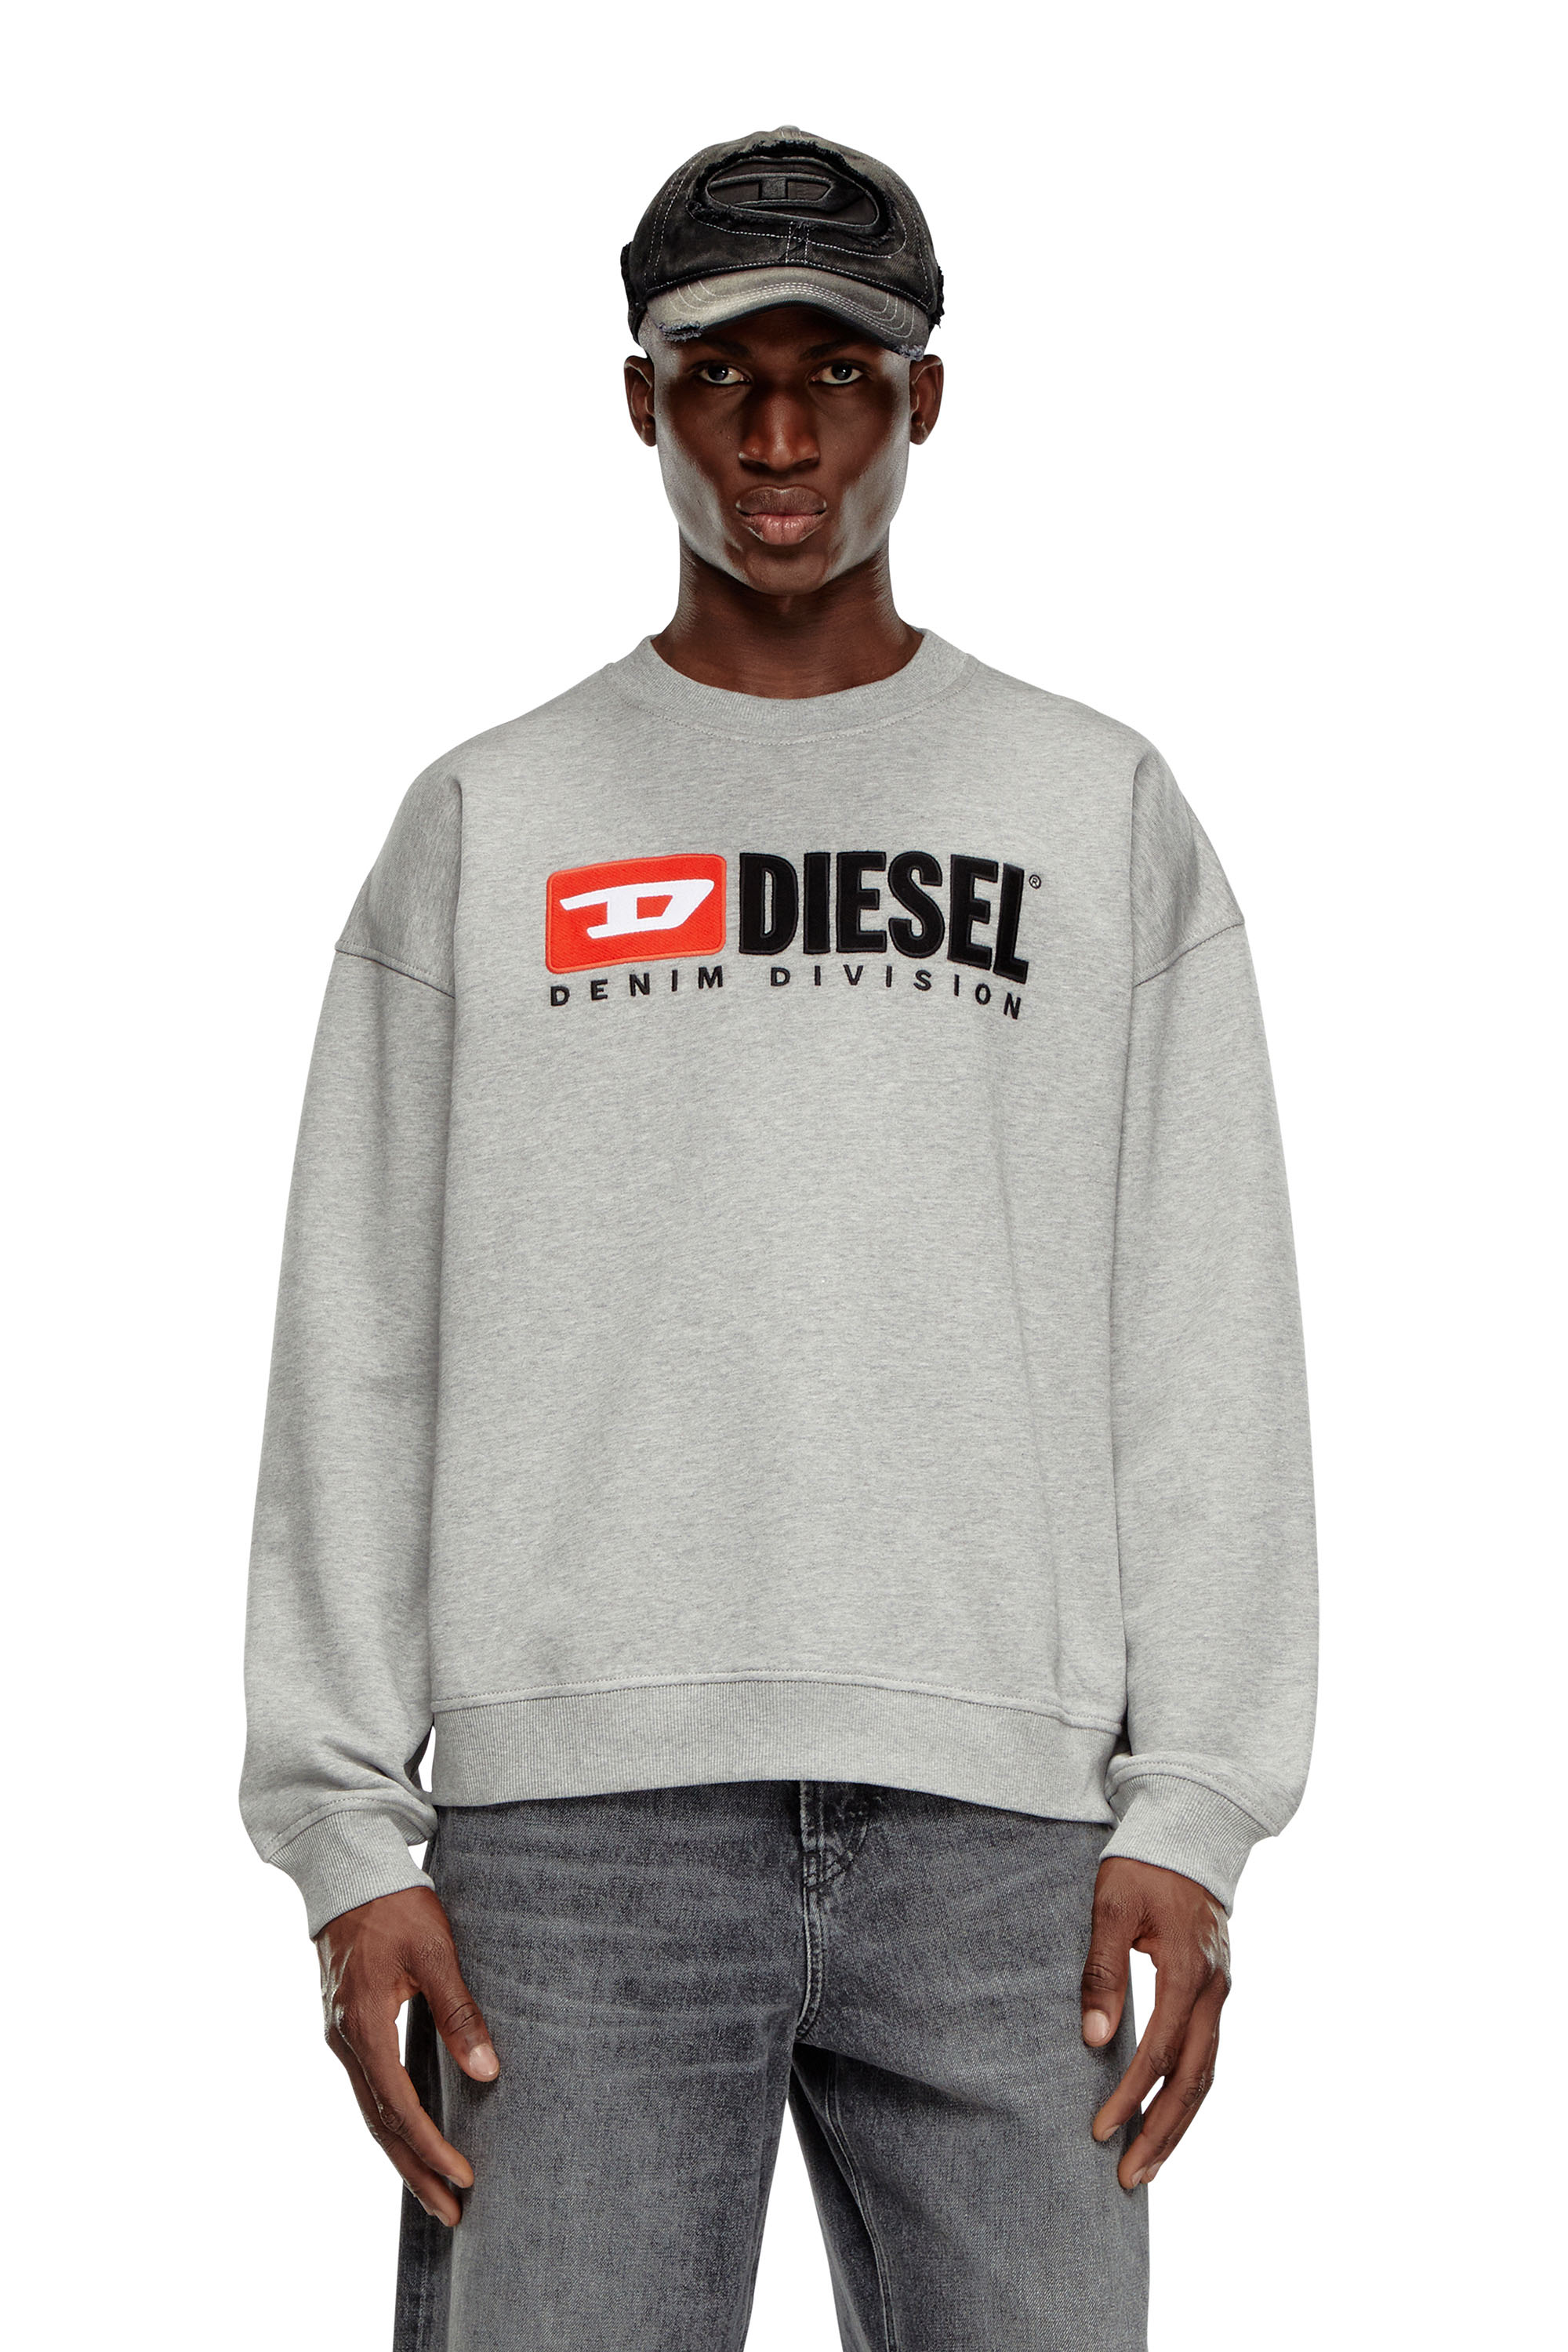 Diesel - S-BOXT-DIV, Man Sweatshirt with Denim Division logo in Grey - Image 1